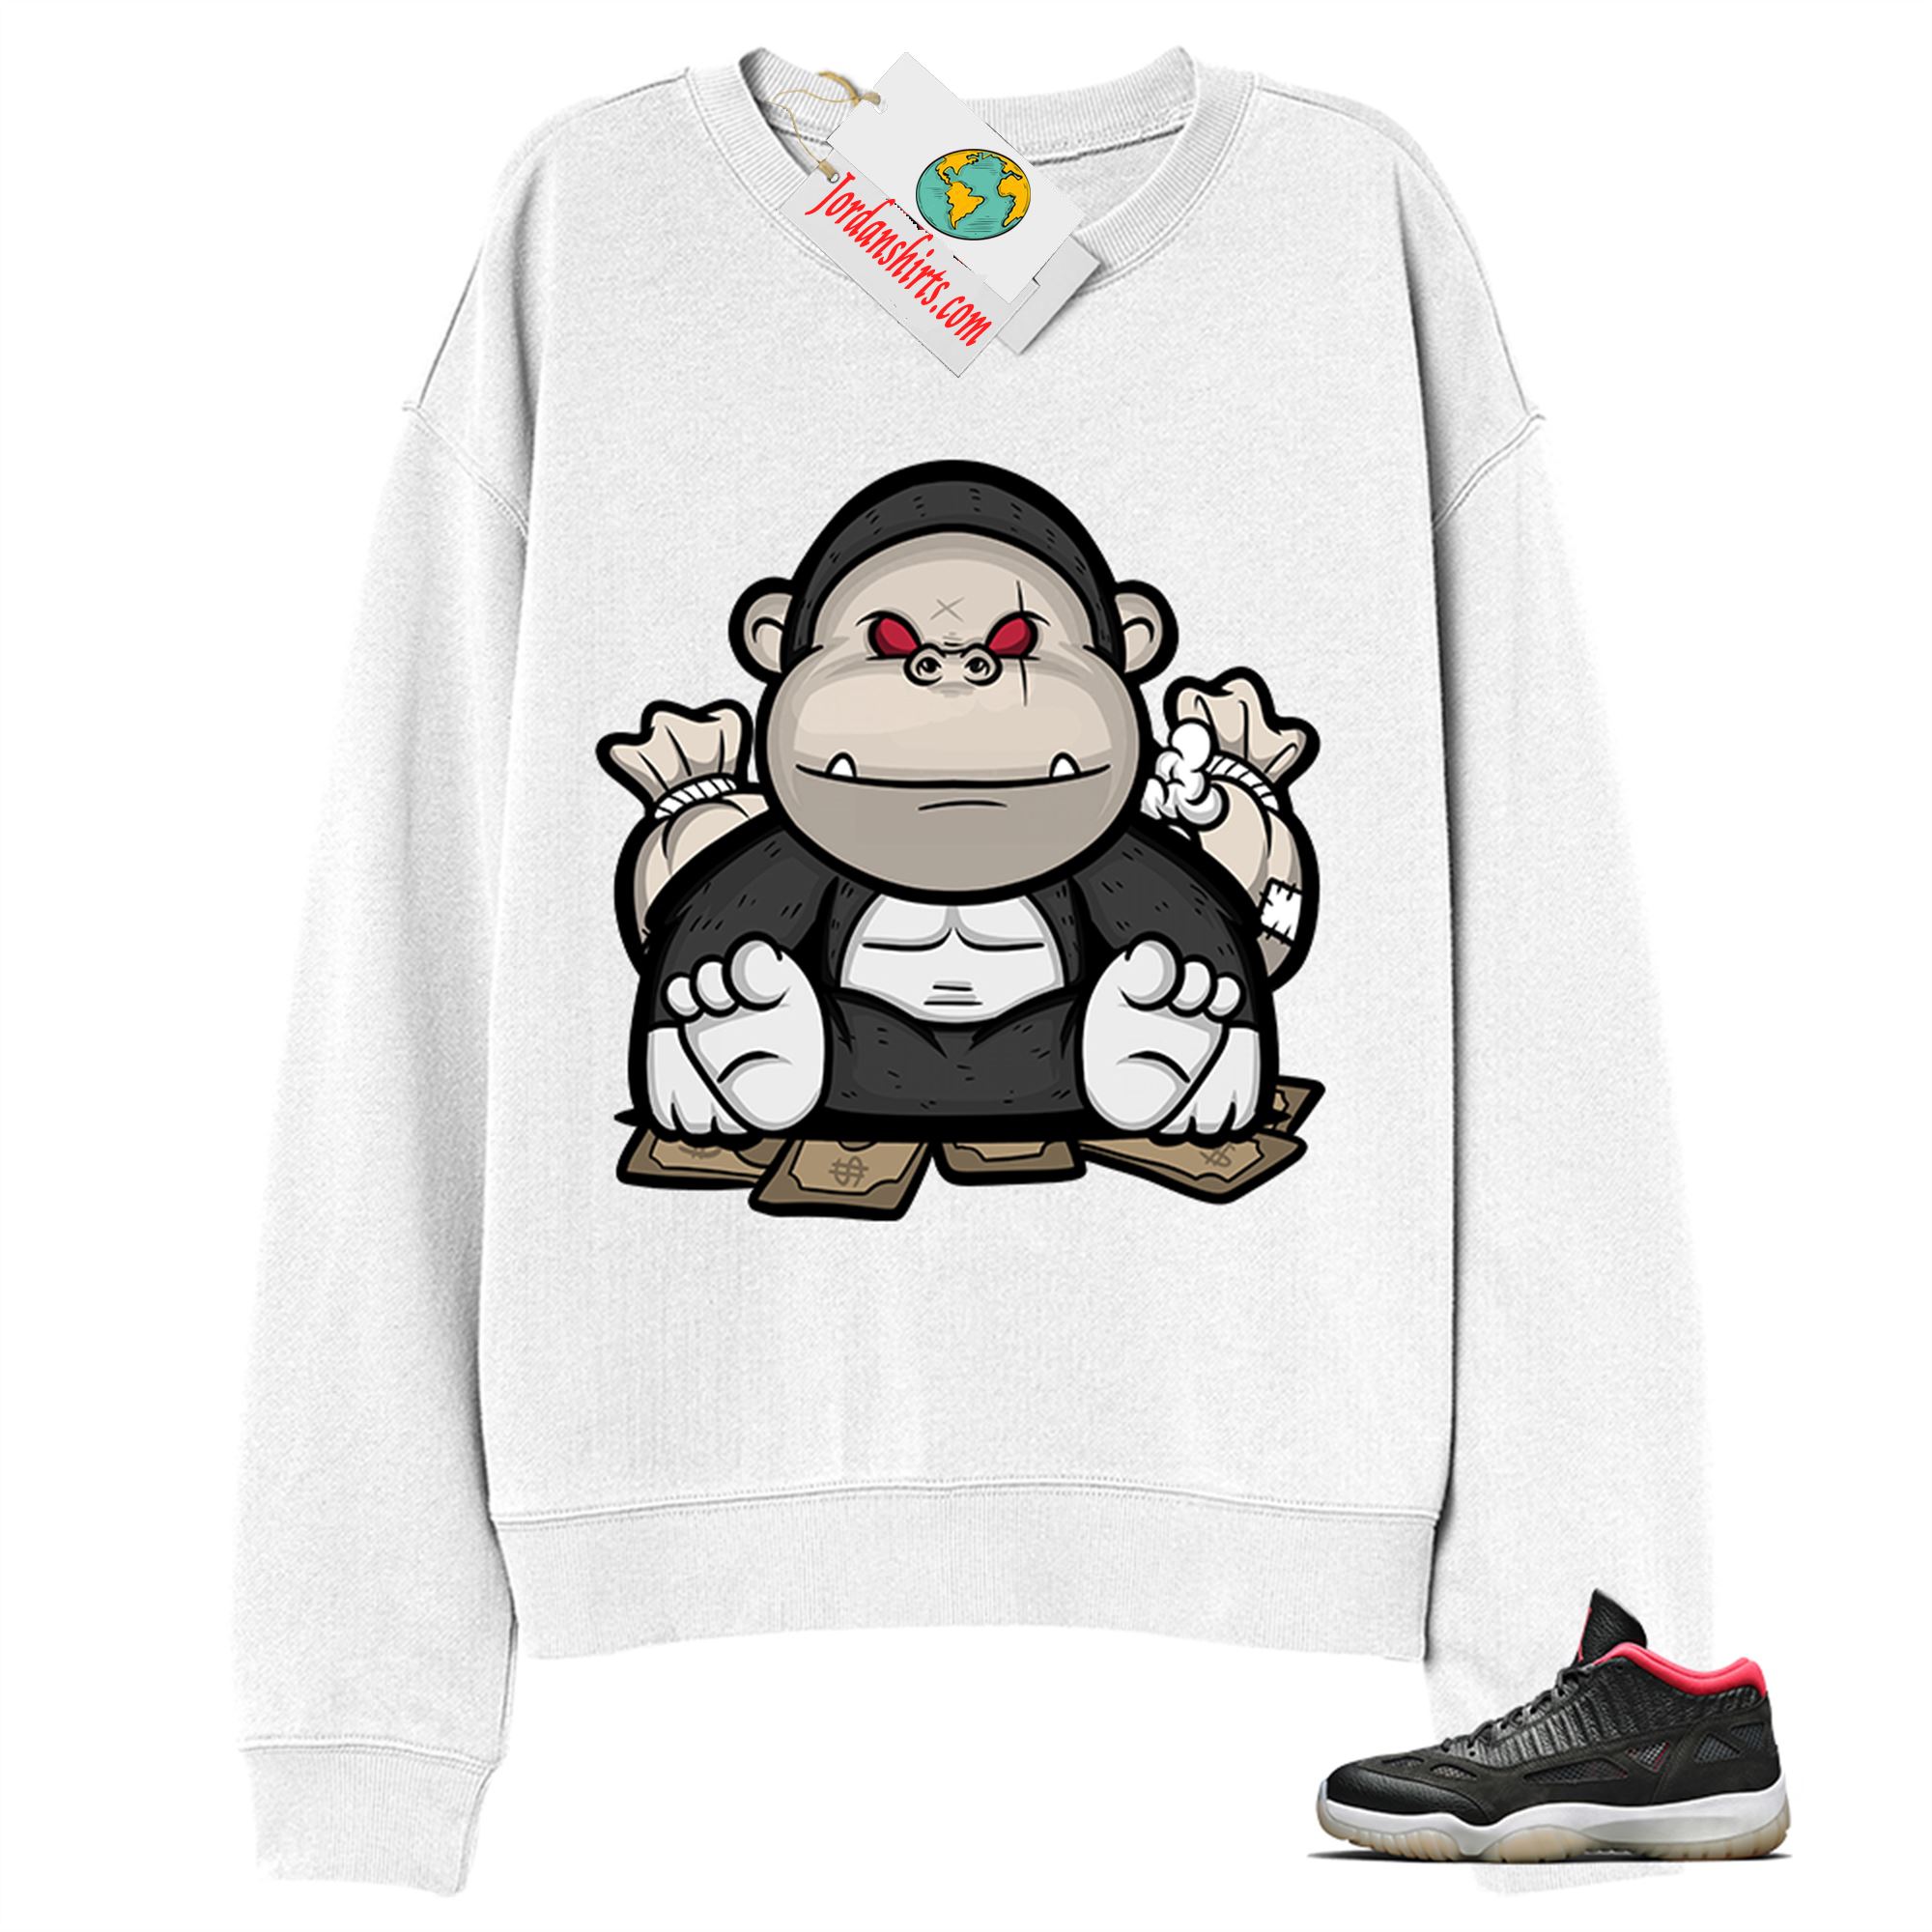 Jordan 11 Sweatshirt, Rich Gorilla With Money White Sweatshirt Air Jordan 11 Bred 11s Size Up To 5xl